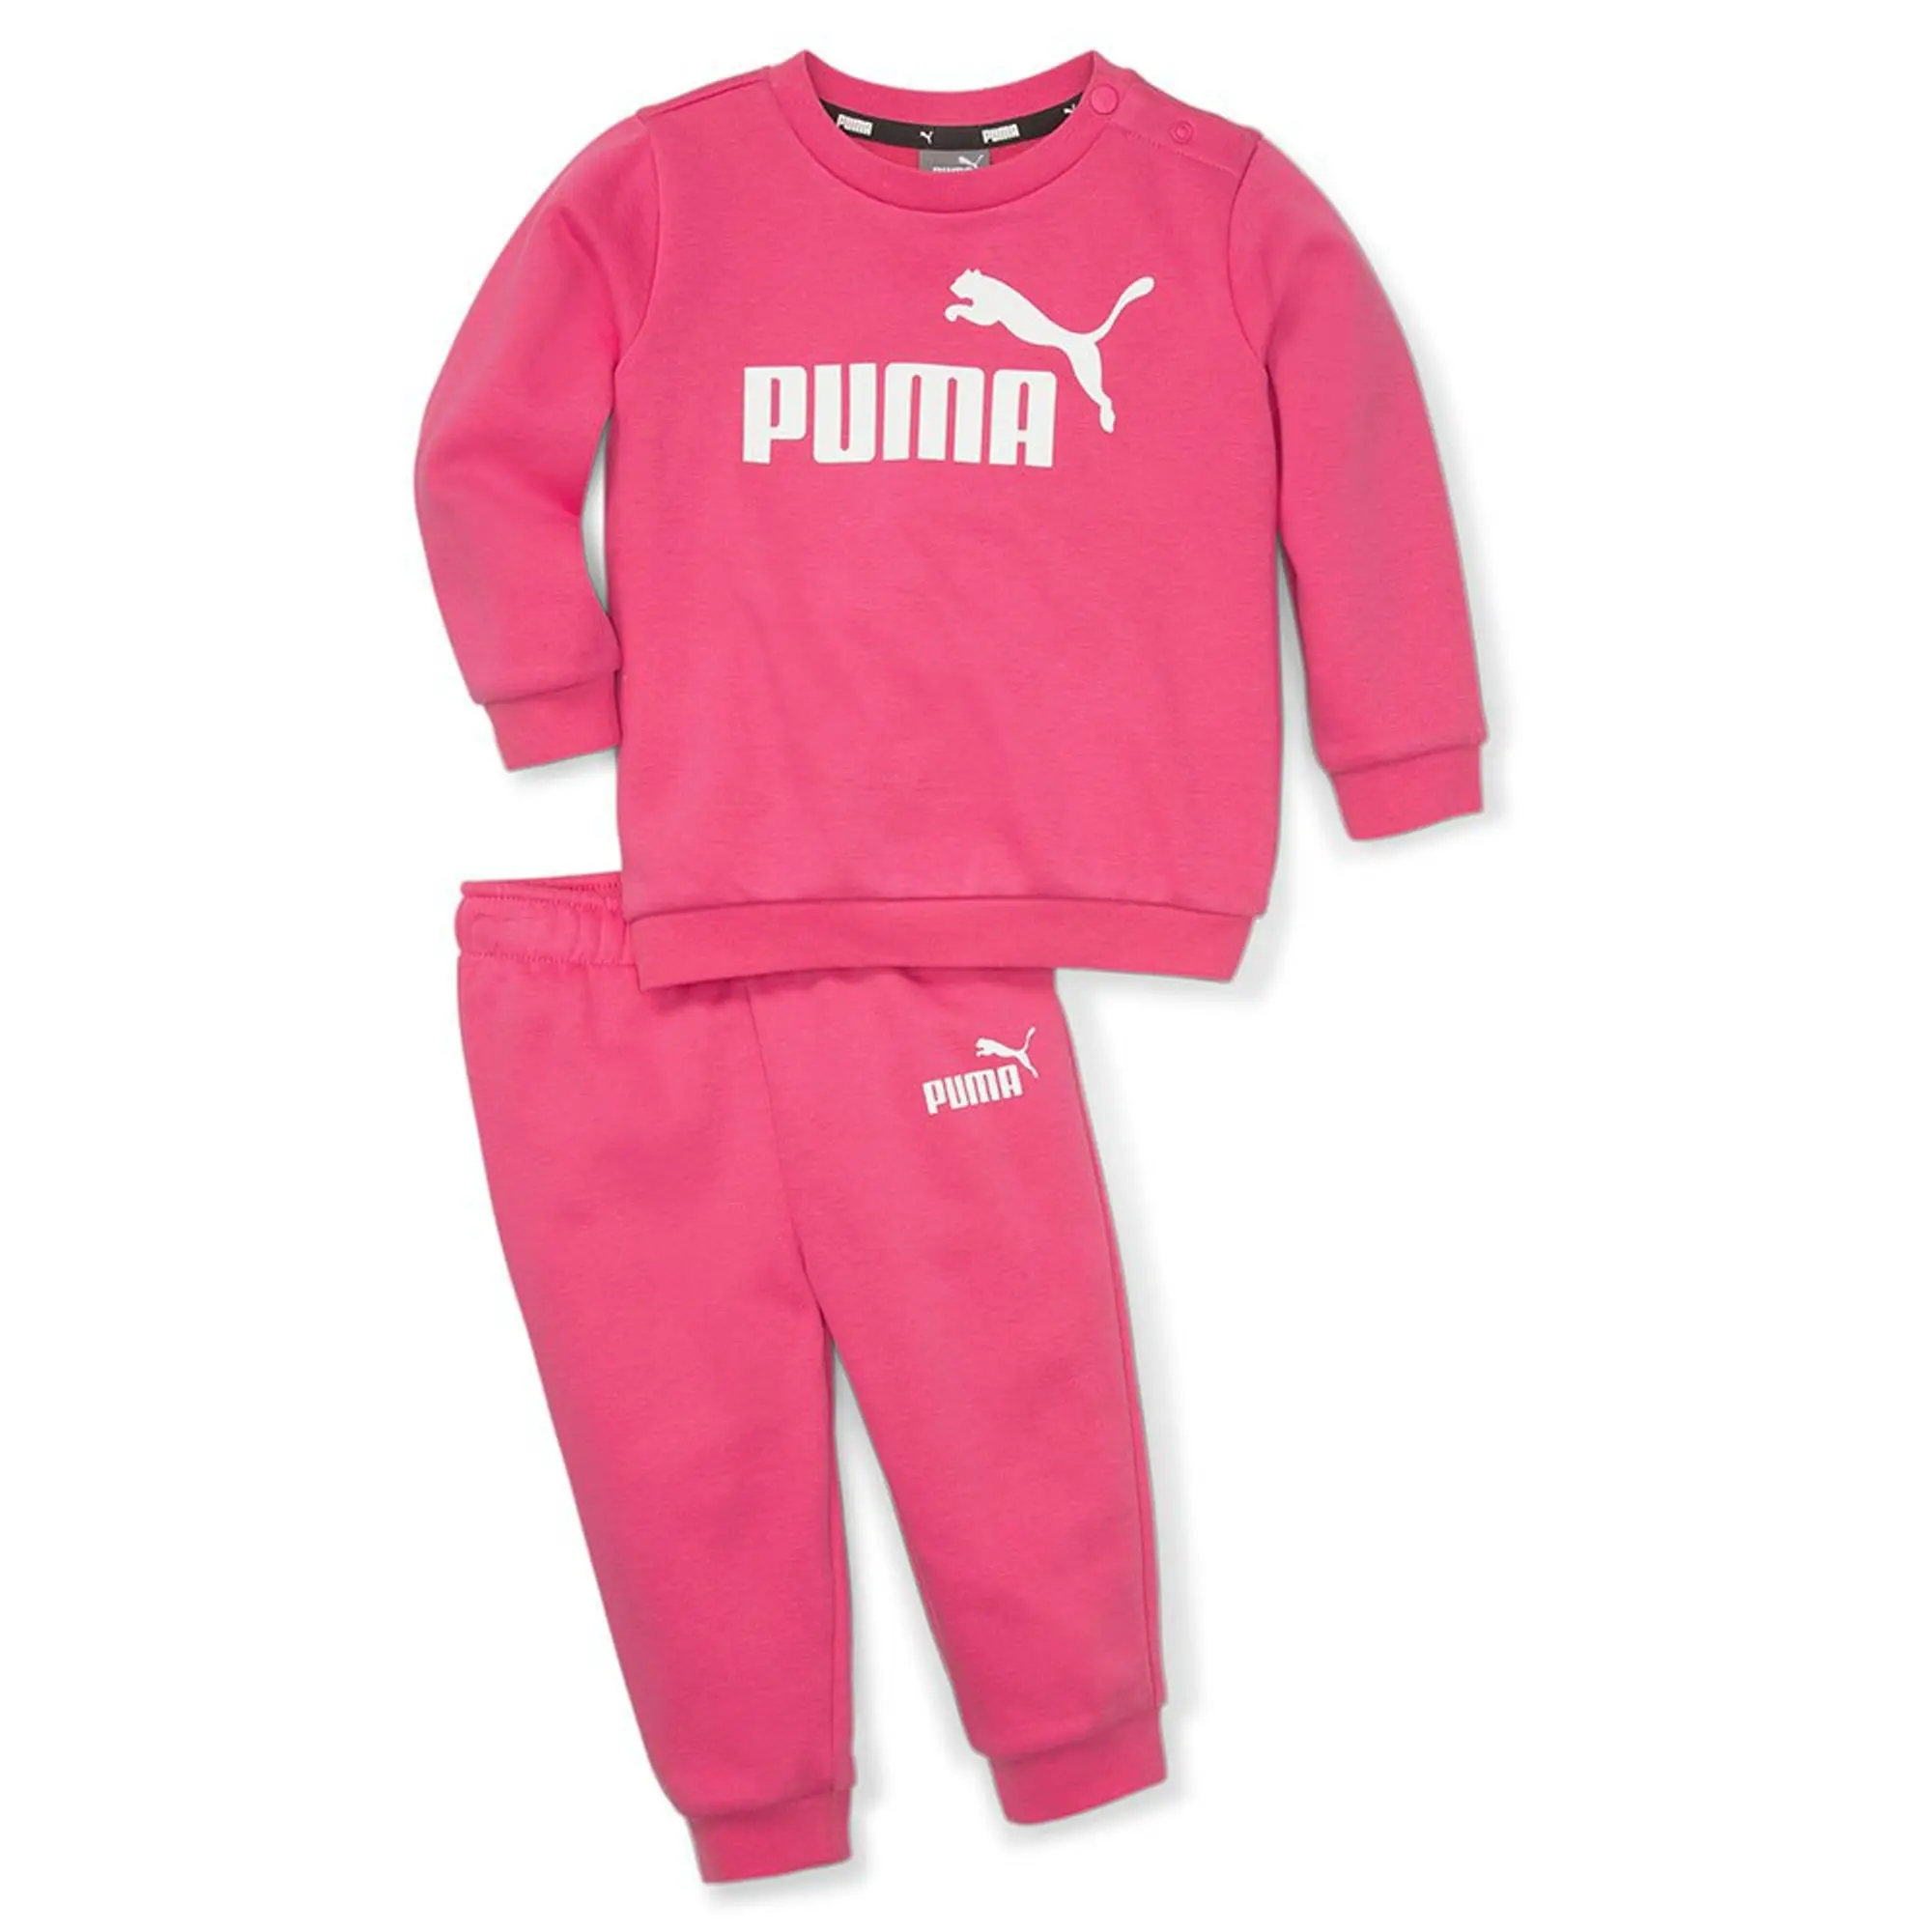 PUMA Essentials Minicats Crew Neck Babies' Jogger Suit, Glowing Pink